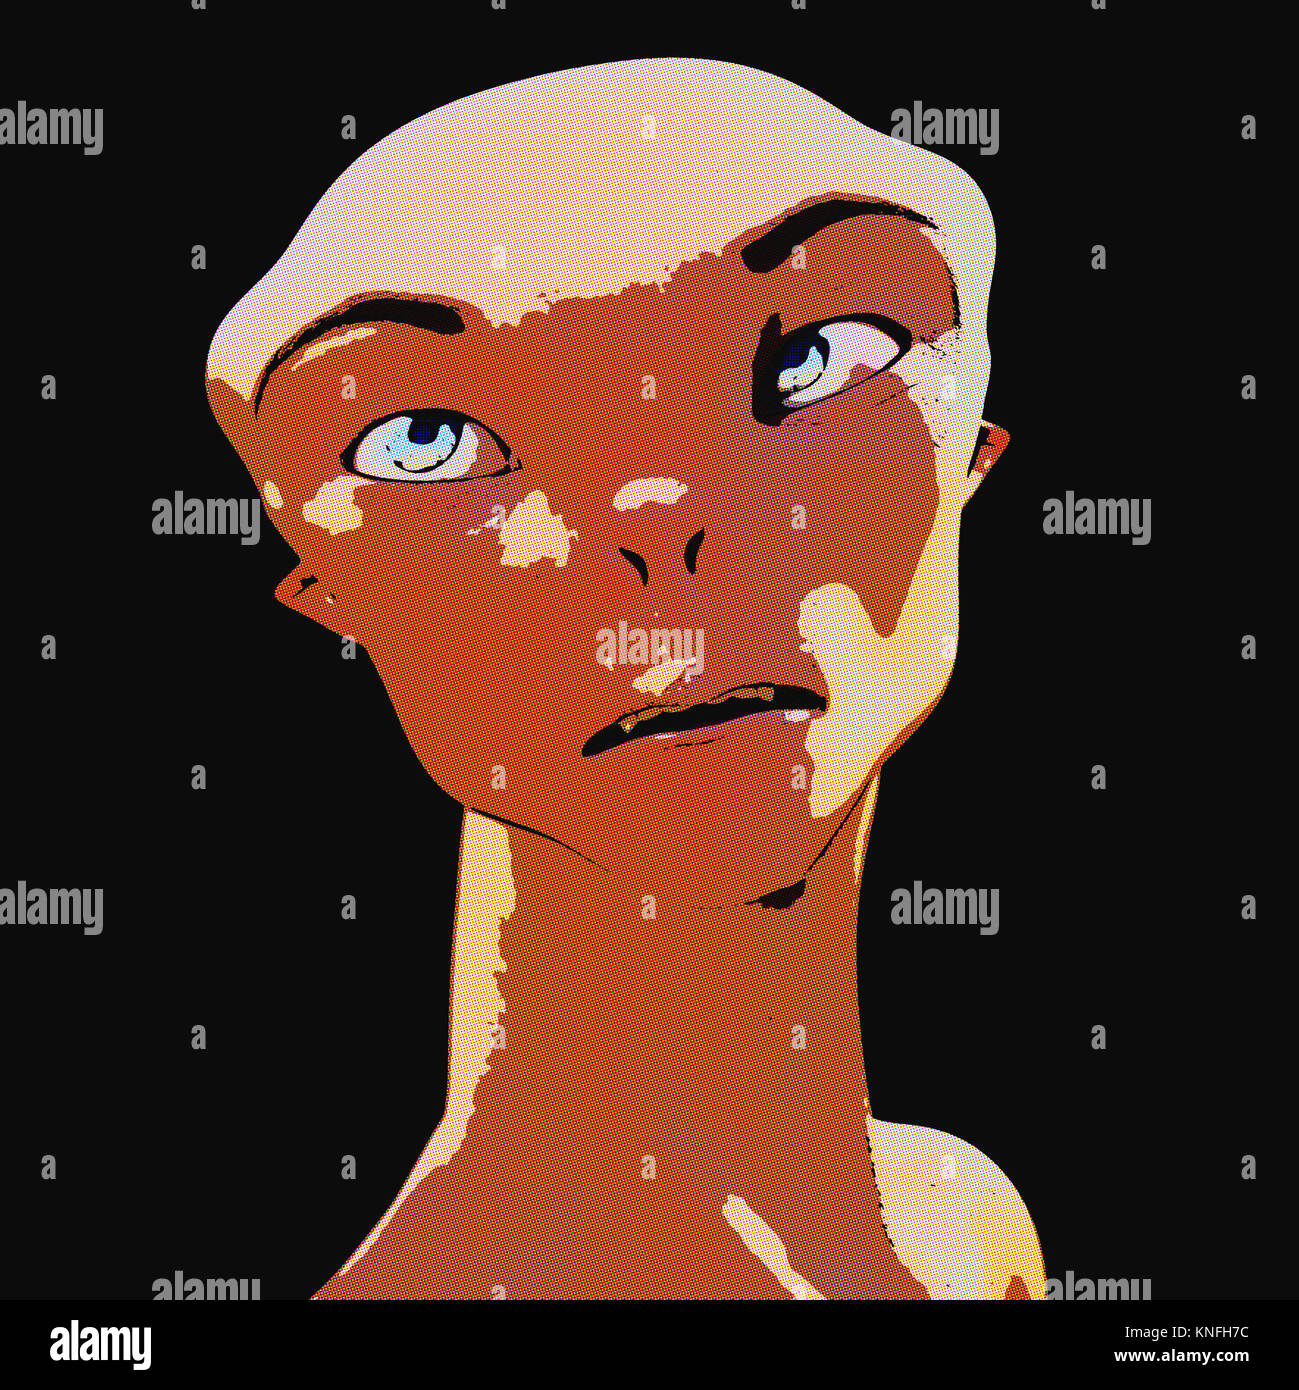 Digital 3D Illustration of a creepy Creature Stock Photo